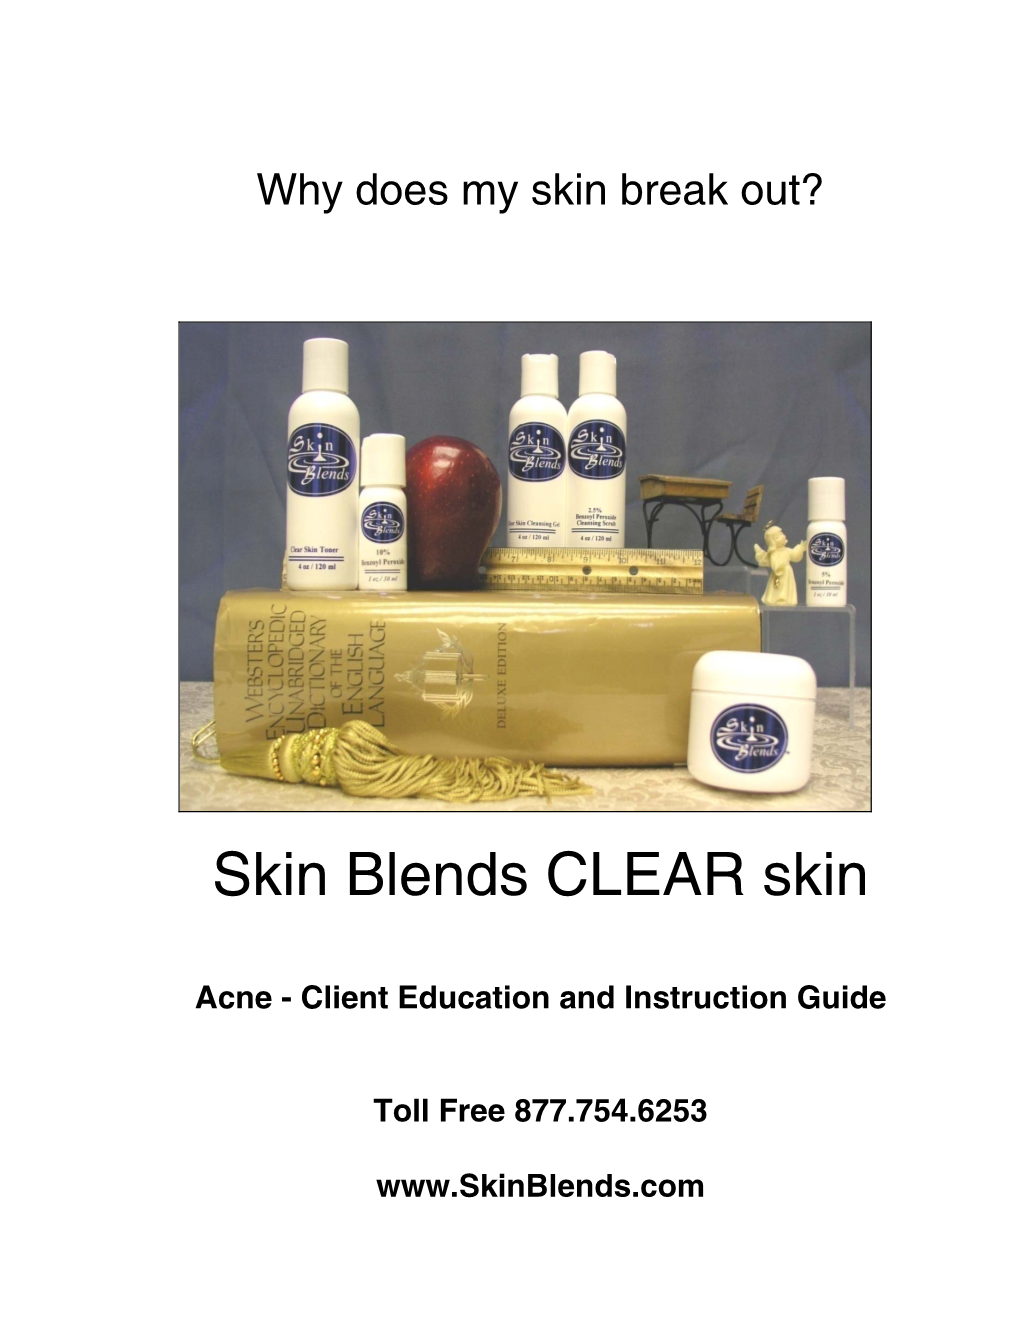 Skin Blends CLEAR Skin